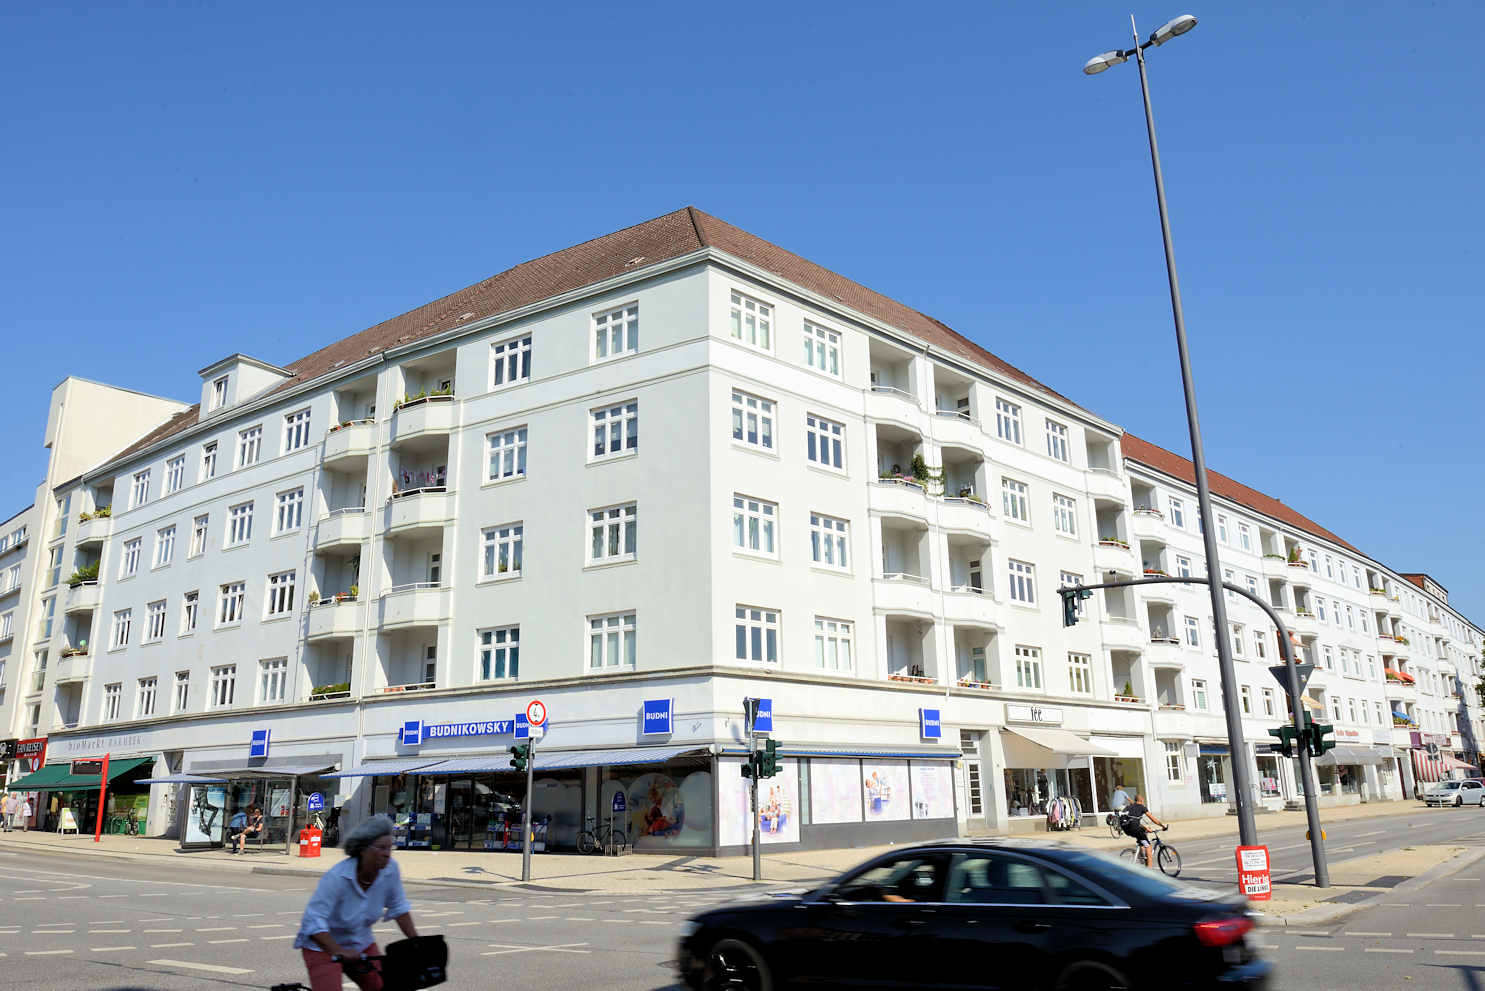 2729 Wohnhaus mit weißer Fassade Balkons. | Fuhlsbüttler Straße - Fuhle, Hamburg Barmbek Nord